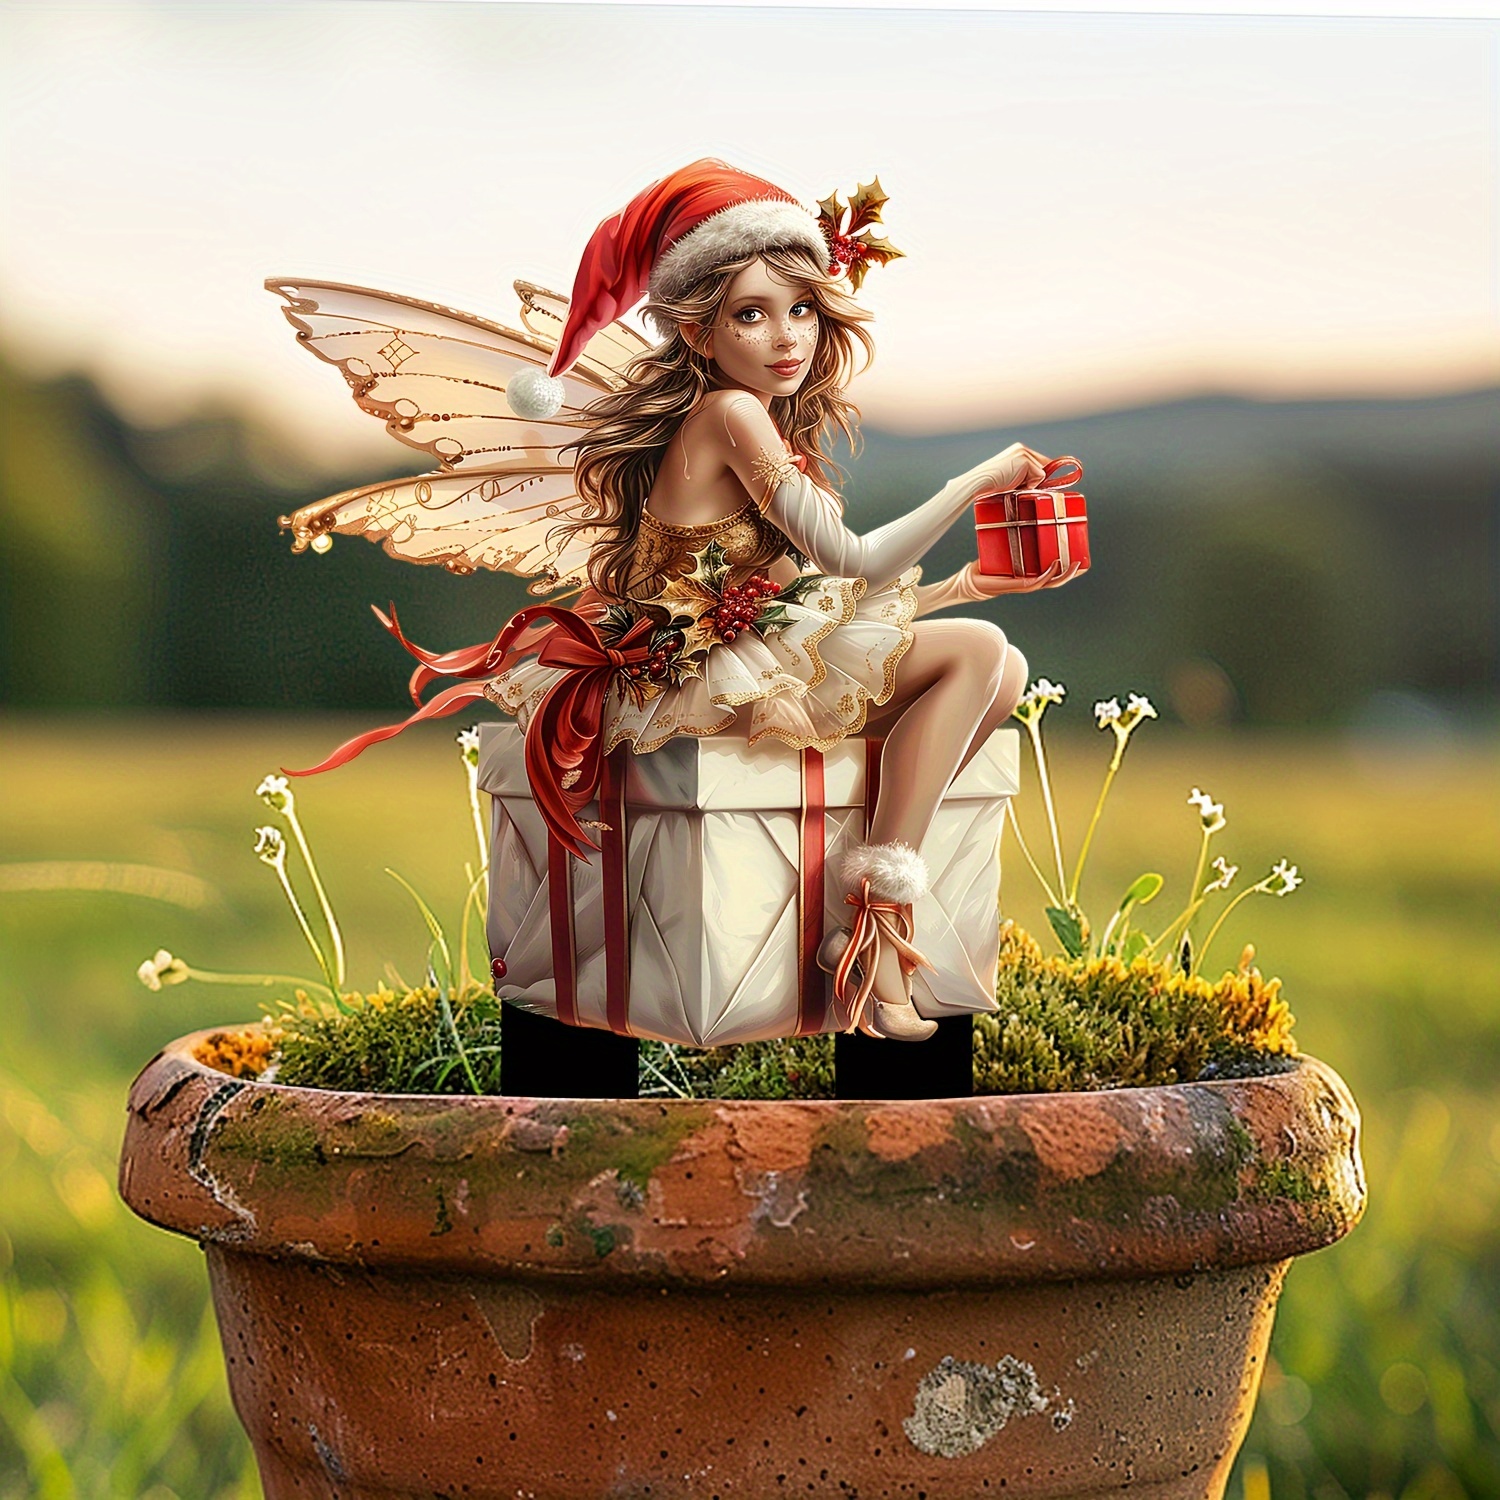 

Boho-chic Elf Garden Stake - Acrylic Christmas Decor, 11.8"x8.2" - Versatile Flower Pot & Landscape Art For Outdoor Enhancement